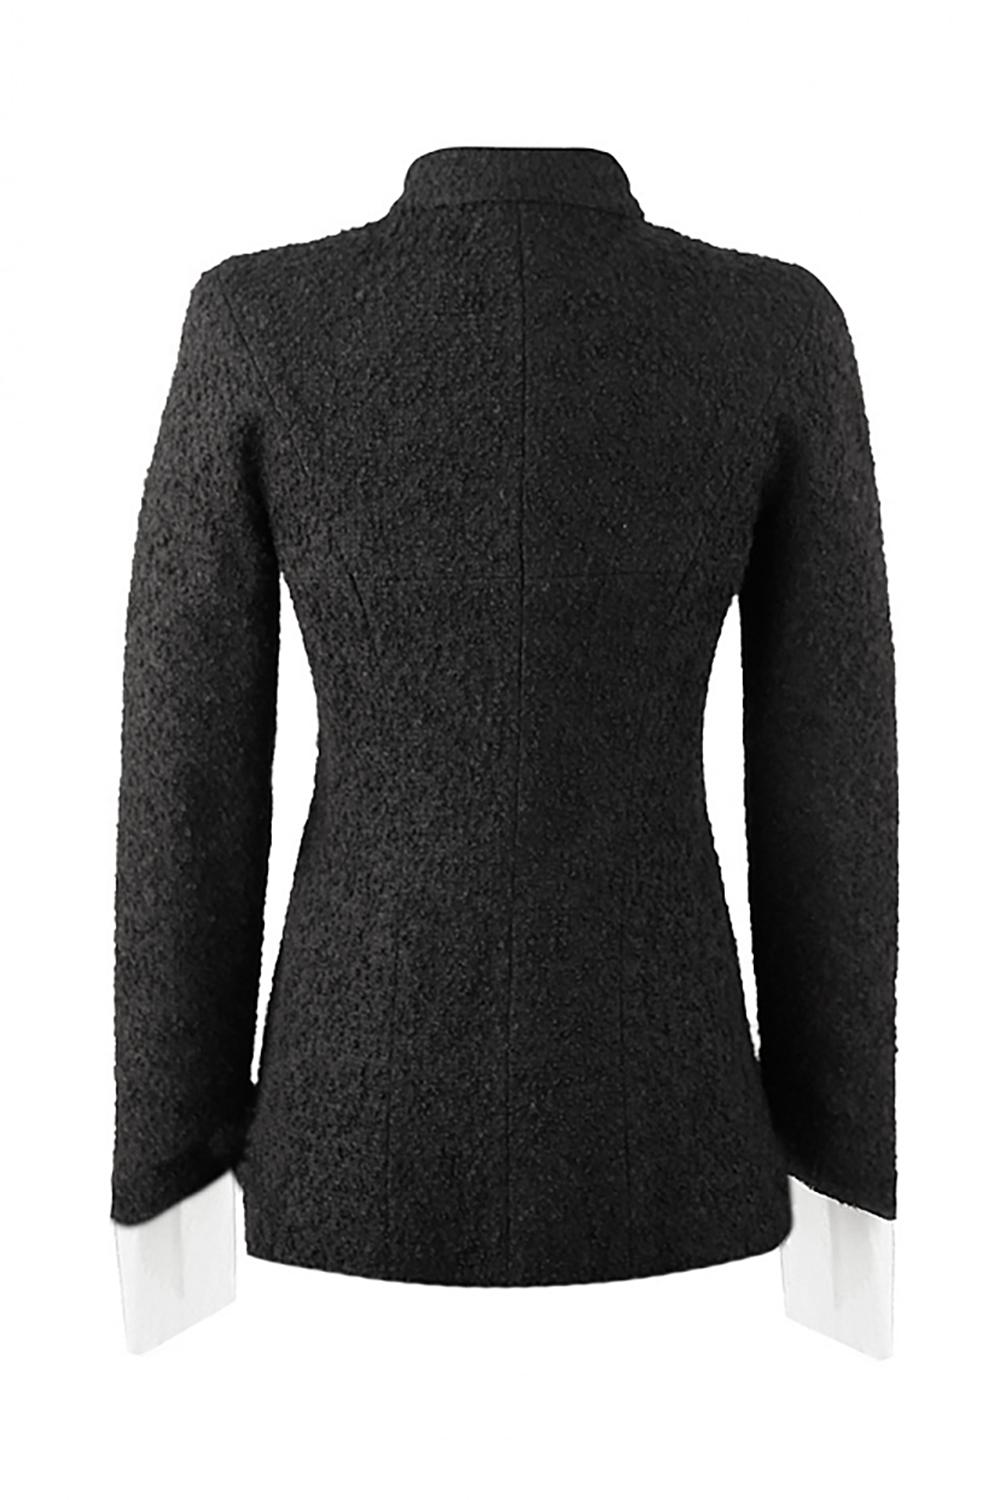 Chanel New Little Black Tweed Jacket 1